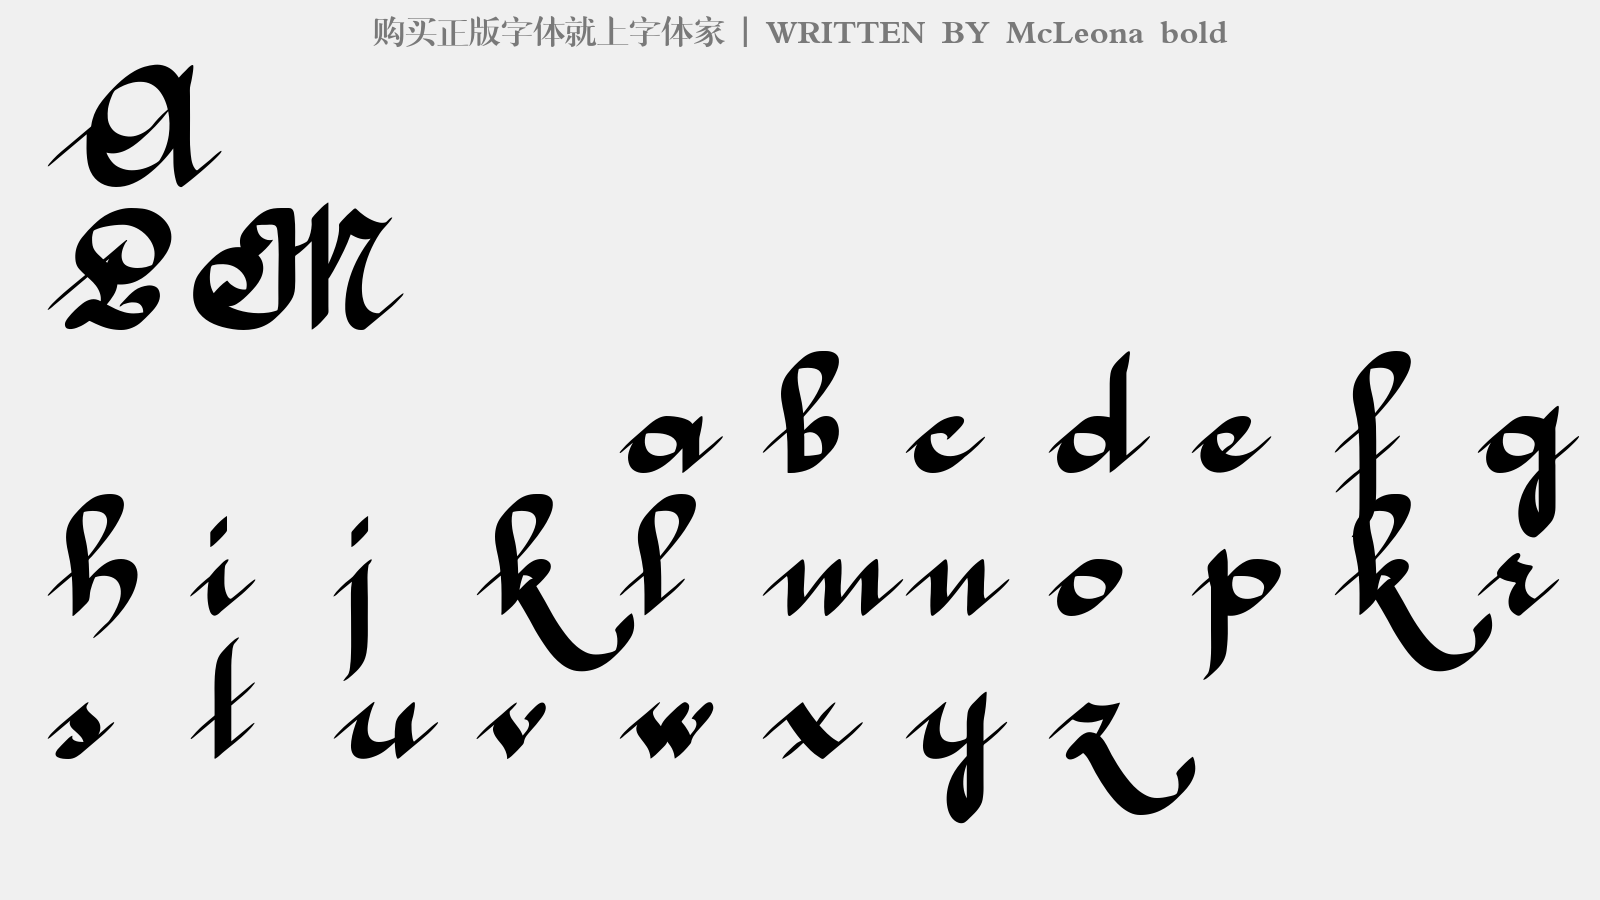 McLeona bold - 大写字母/小写字母/数字